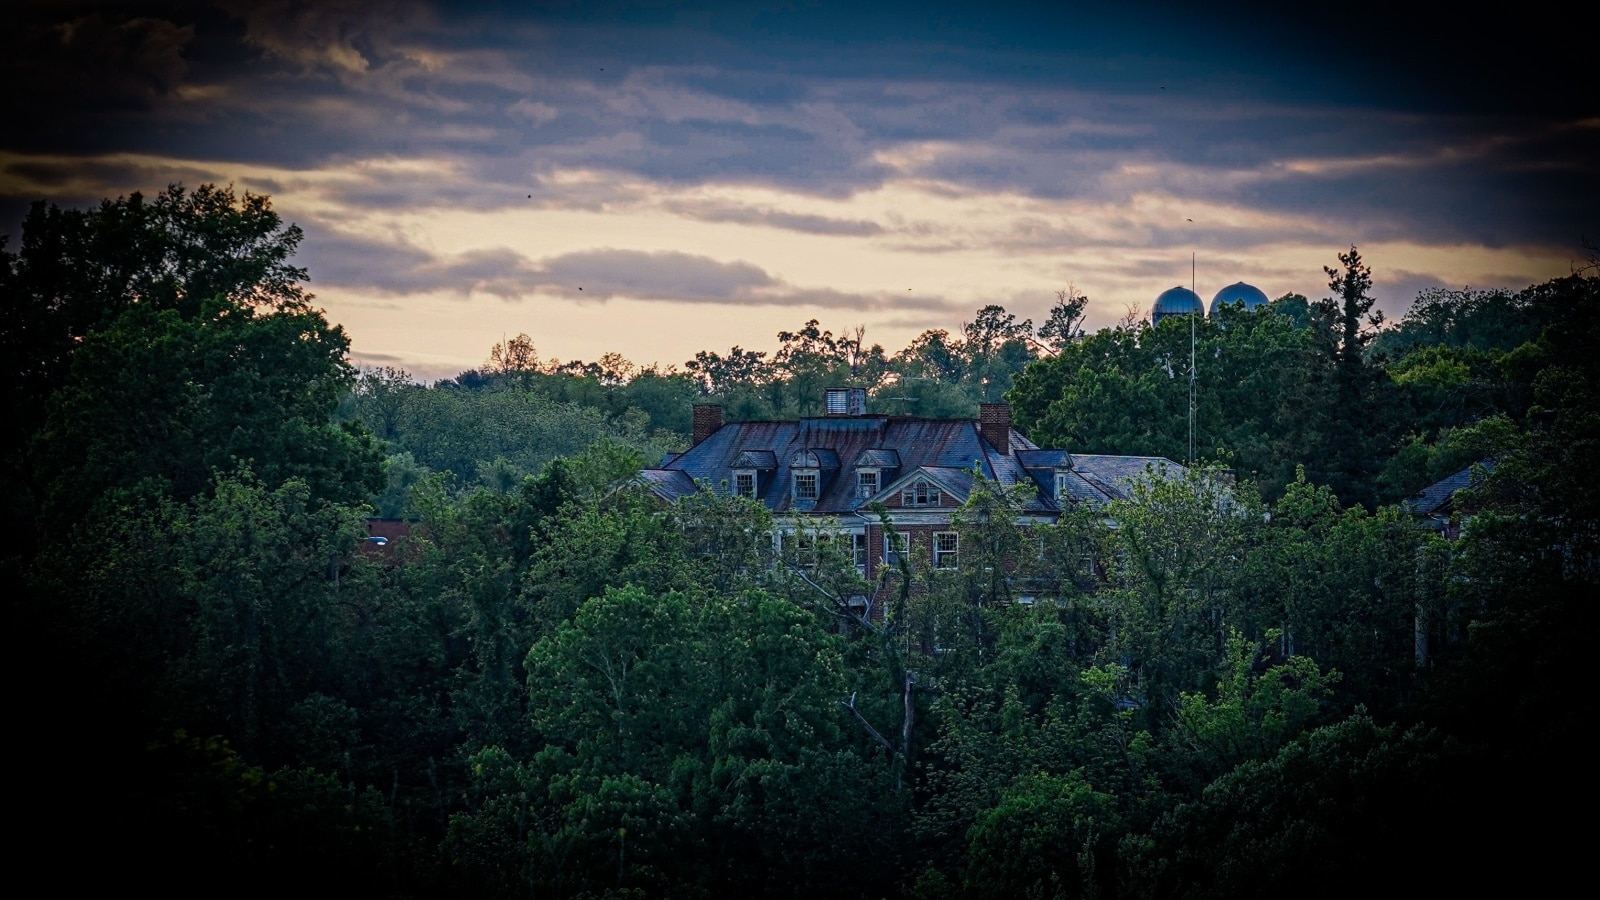 Fairlawn, Virginia , United States of America 5-6-2023 St. Albans historical landmark sanitarium and haunted house attraction